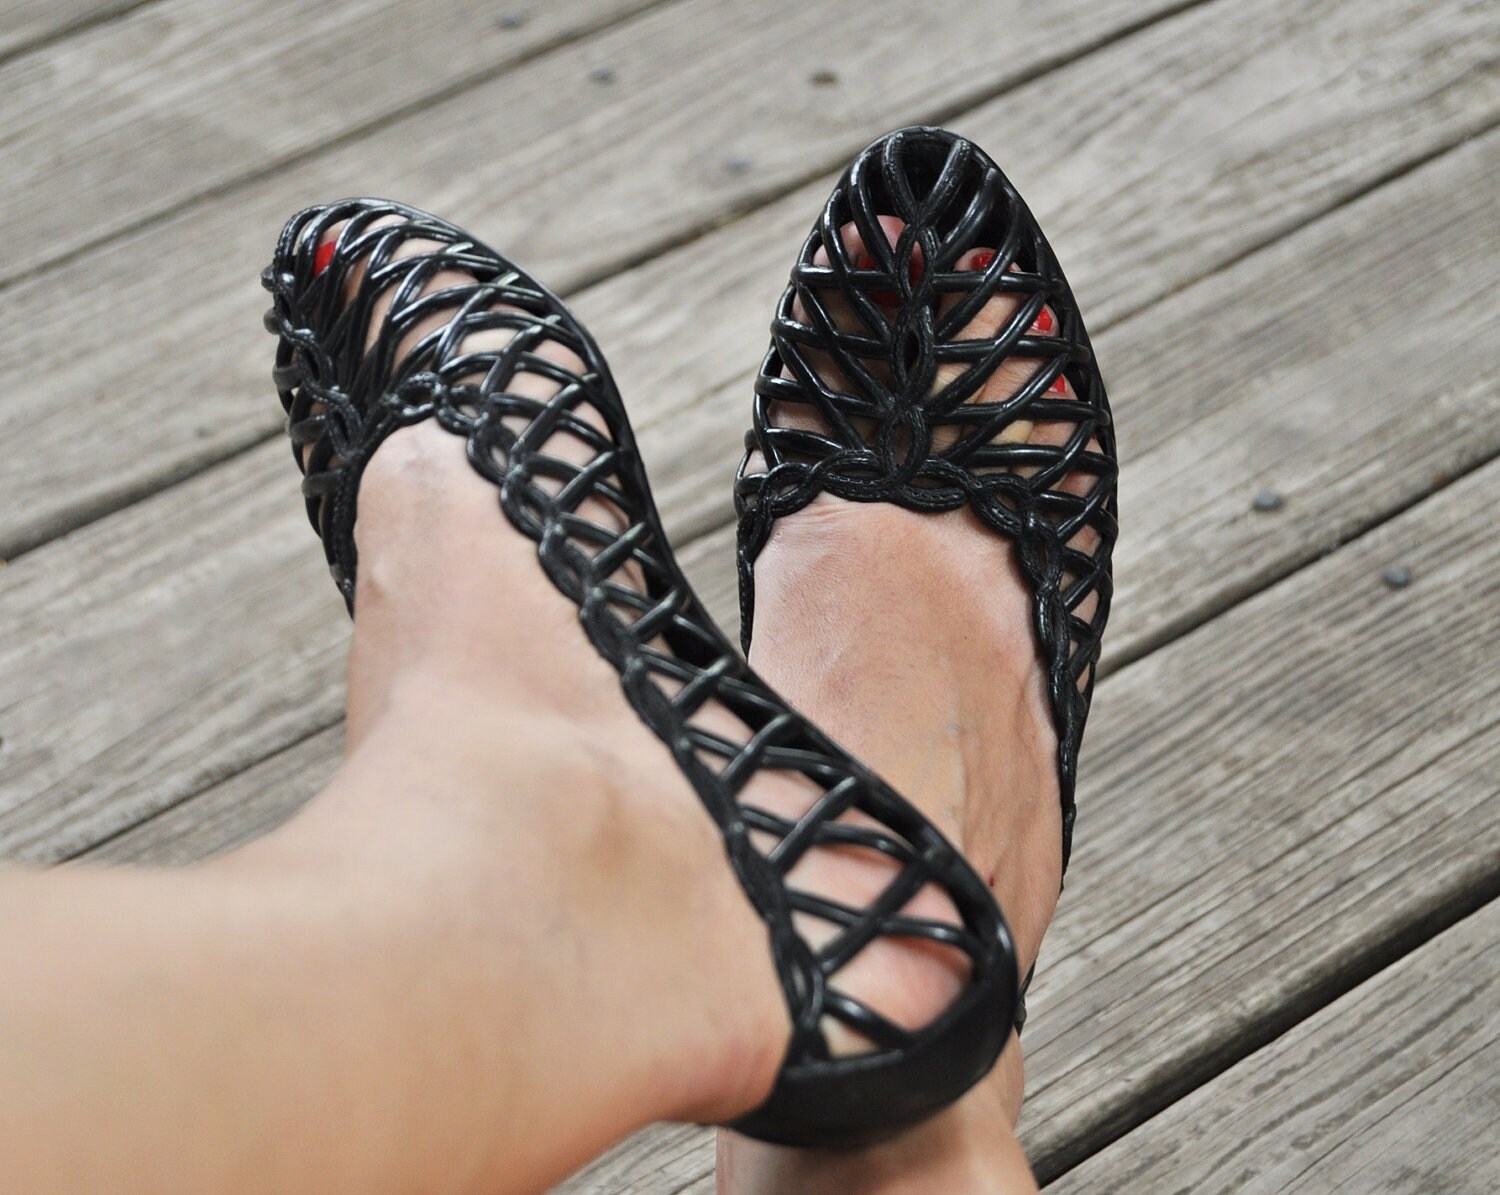 Vintage Ladies Jelly Shoes Black Lattice Weave 70s or 80s